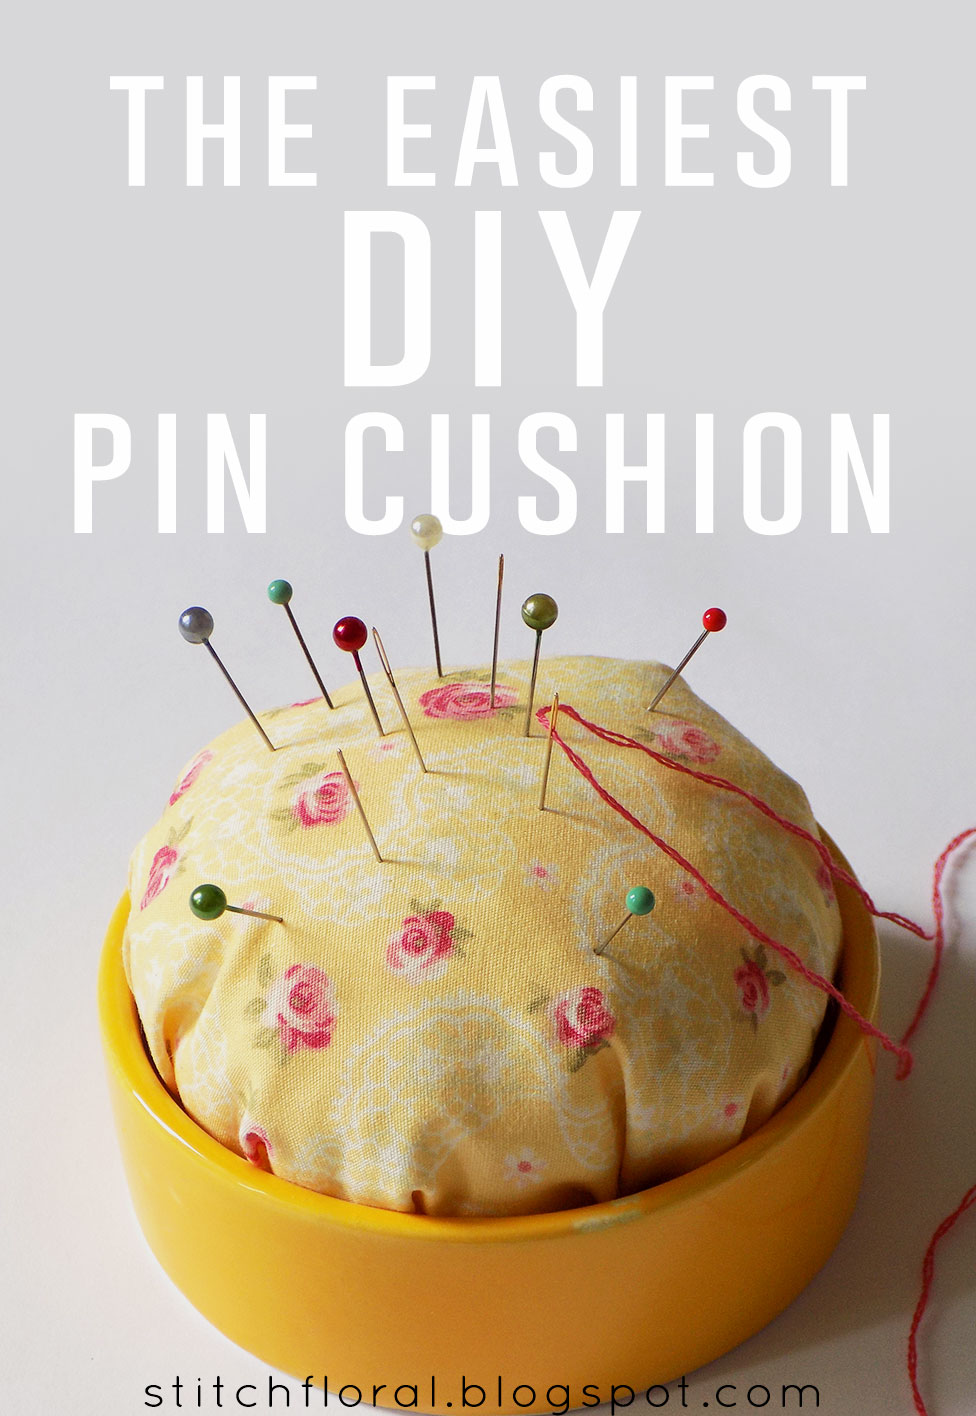 Wrist Pin Cushion - Love to Stitch and Sew